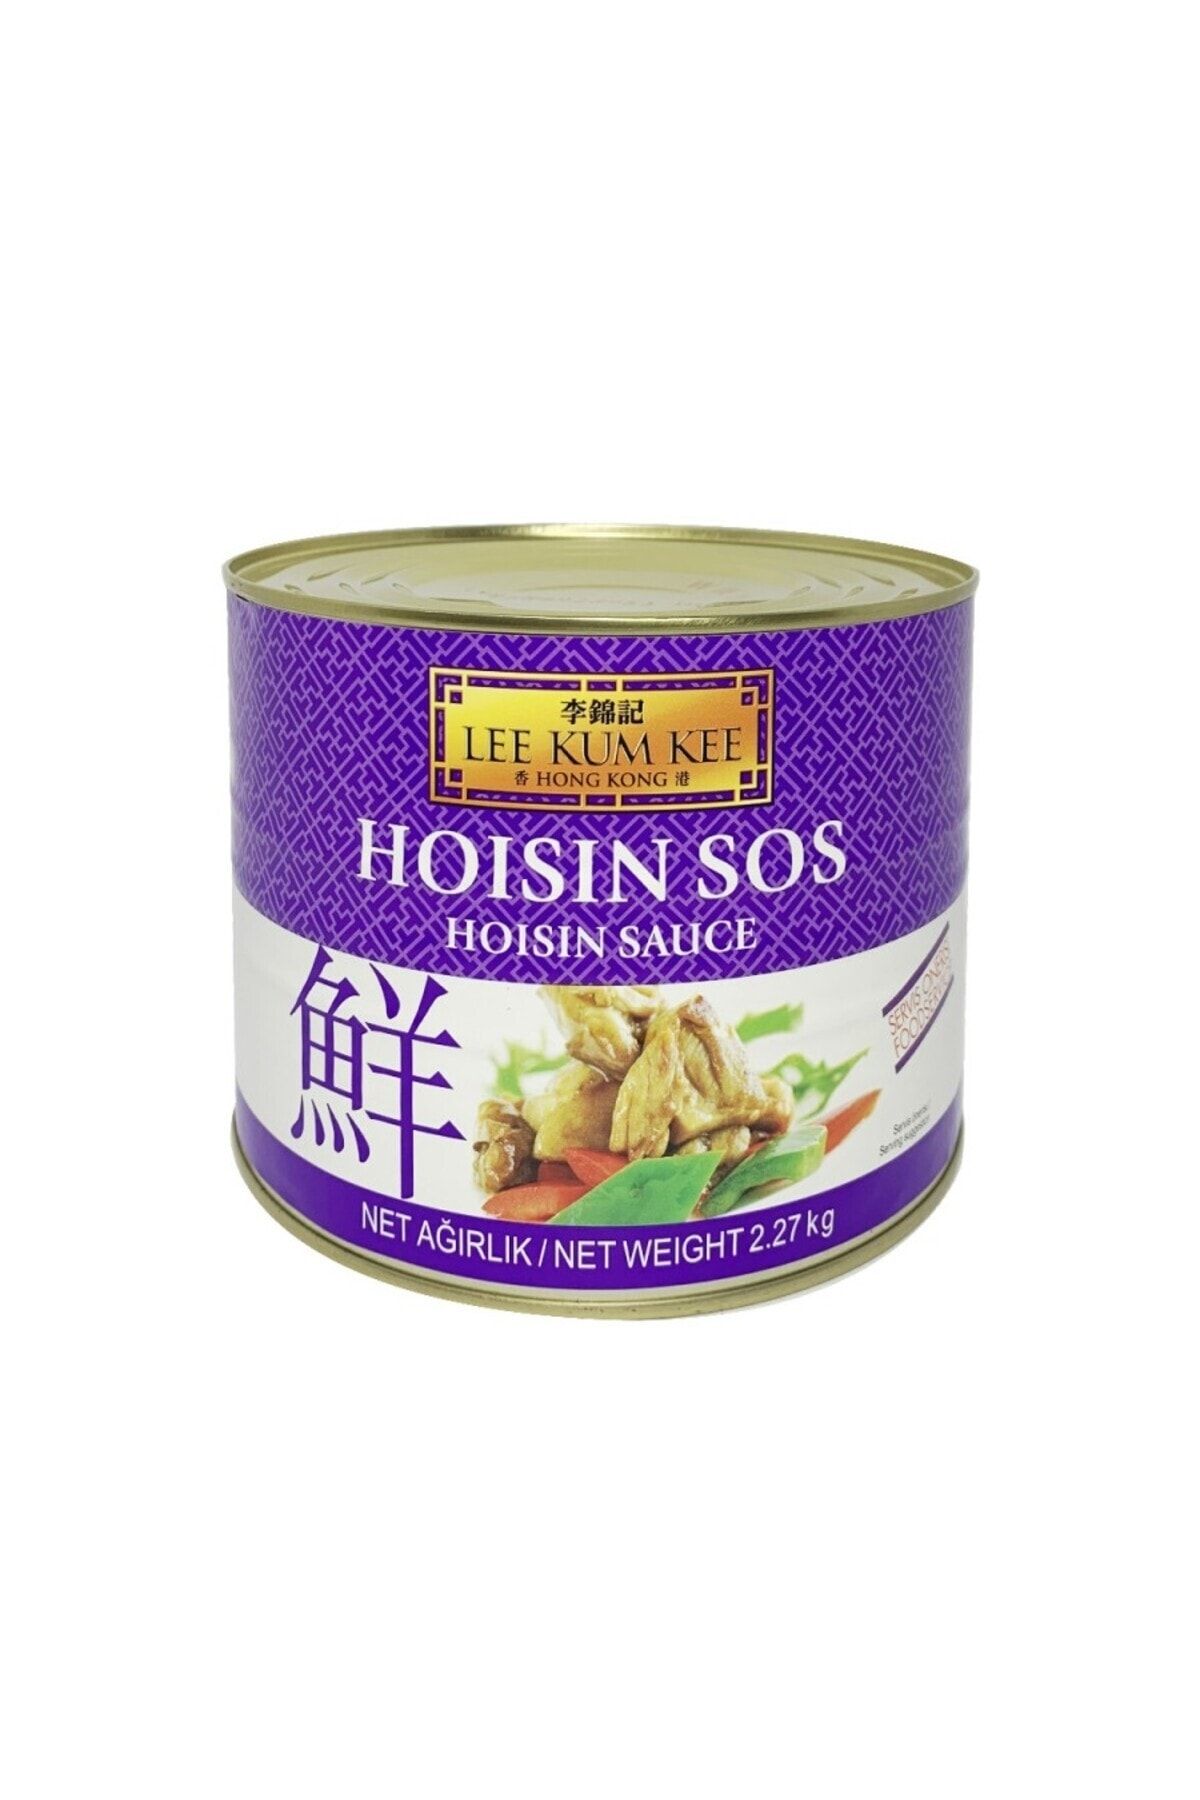 Lee Kum Kee Hoisin Sosu 2.27kg Hoisin Sauce Son Tüketim Tairihi Expiry Date: 10/10/2025